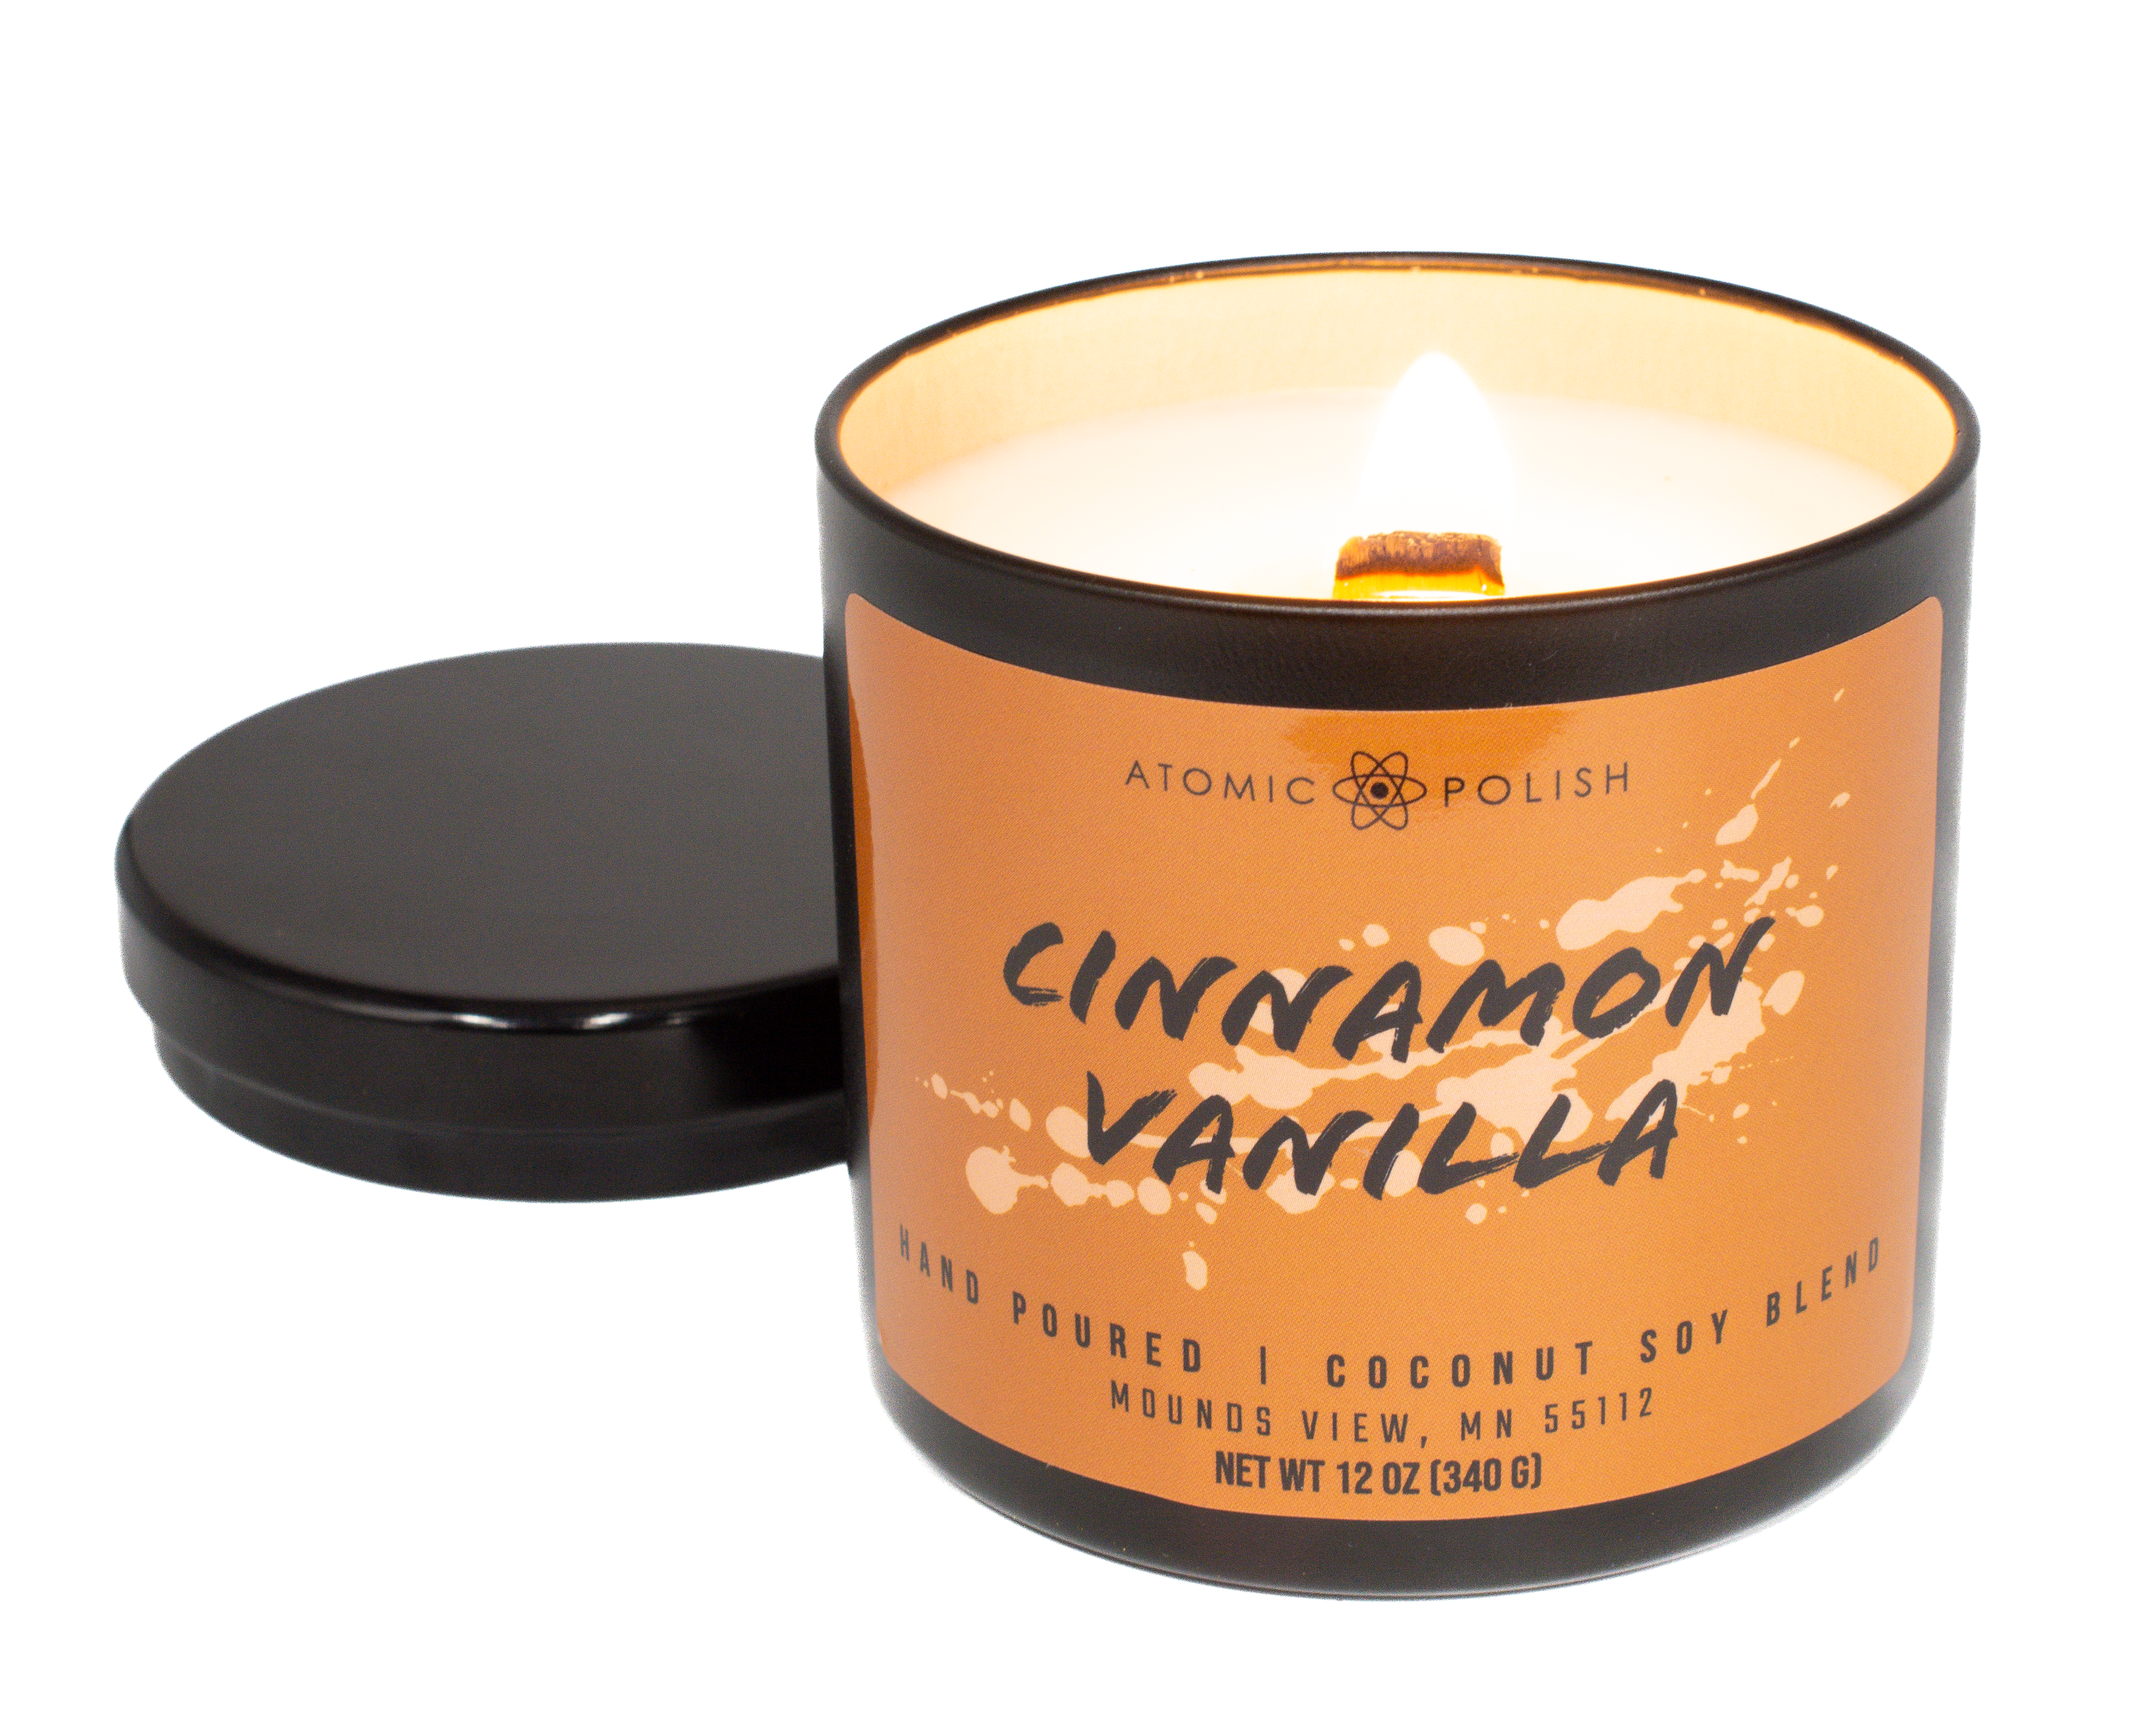 Cinnamon Sticks Luxury Coconut + Soy Wax Wood Wick Candle